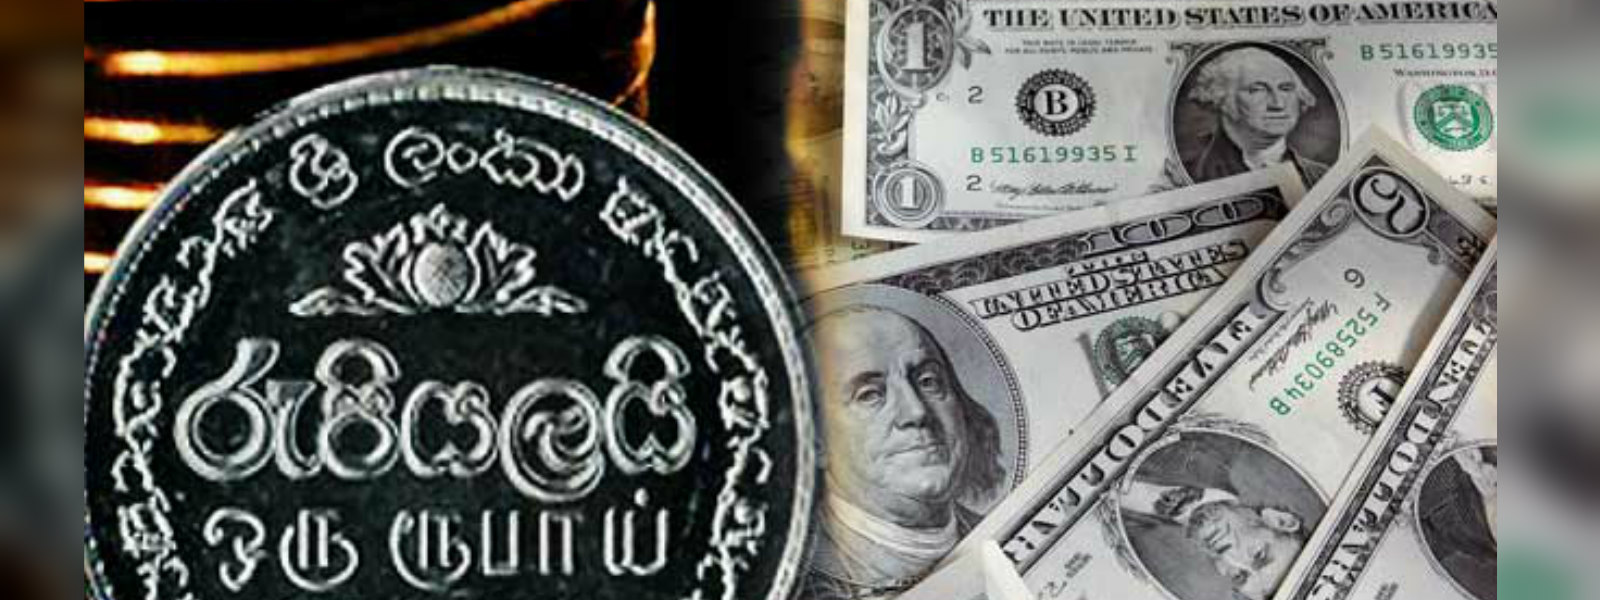 Sri Lankan rupee falls once again 